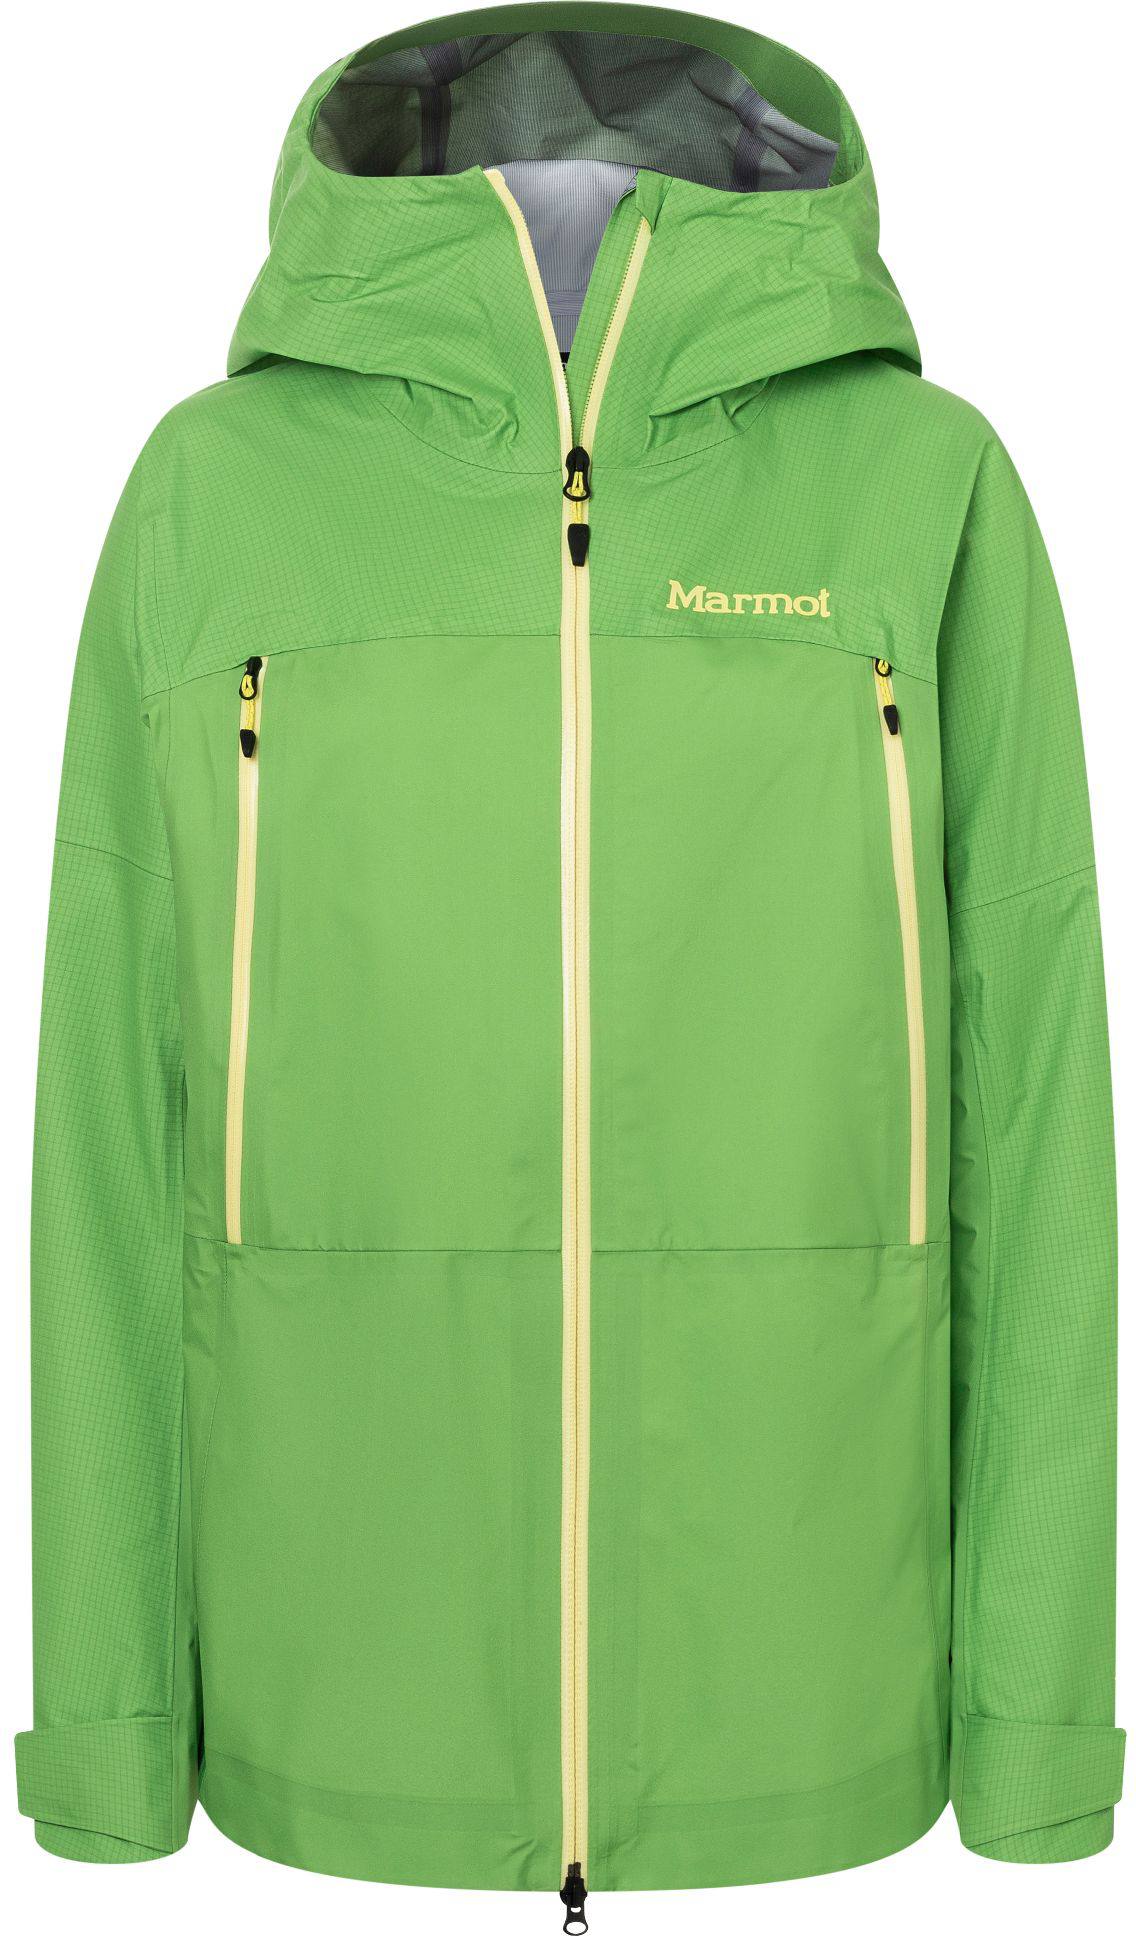 Marmot Women’s Mitre Peak Jacket Kiwi S